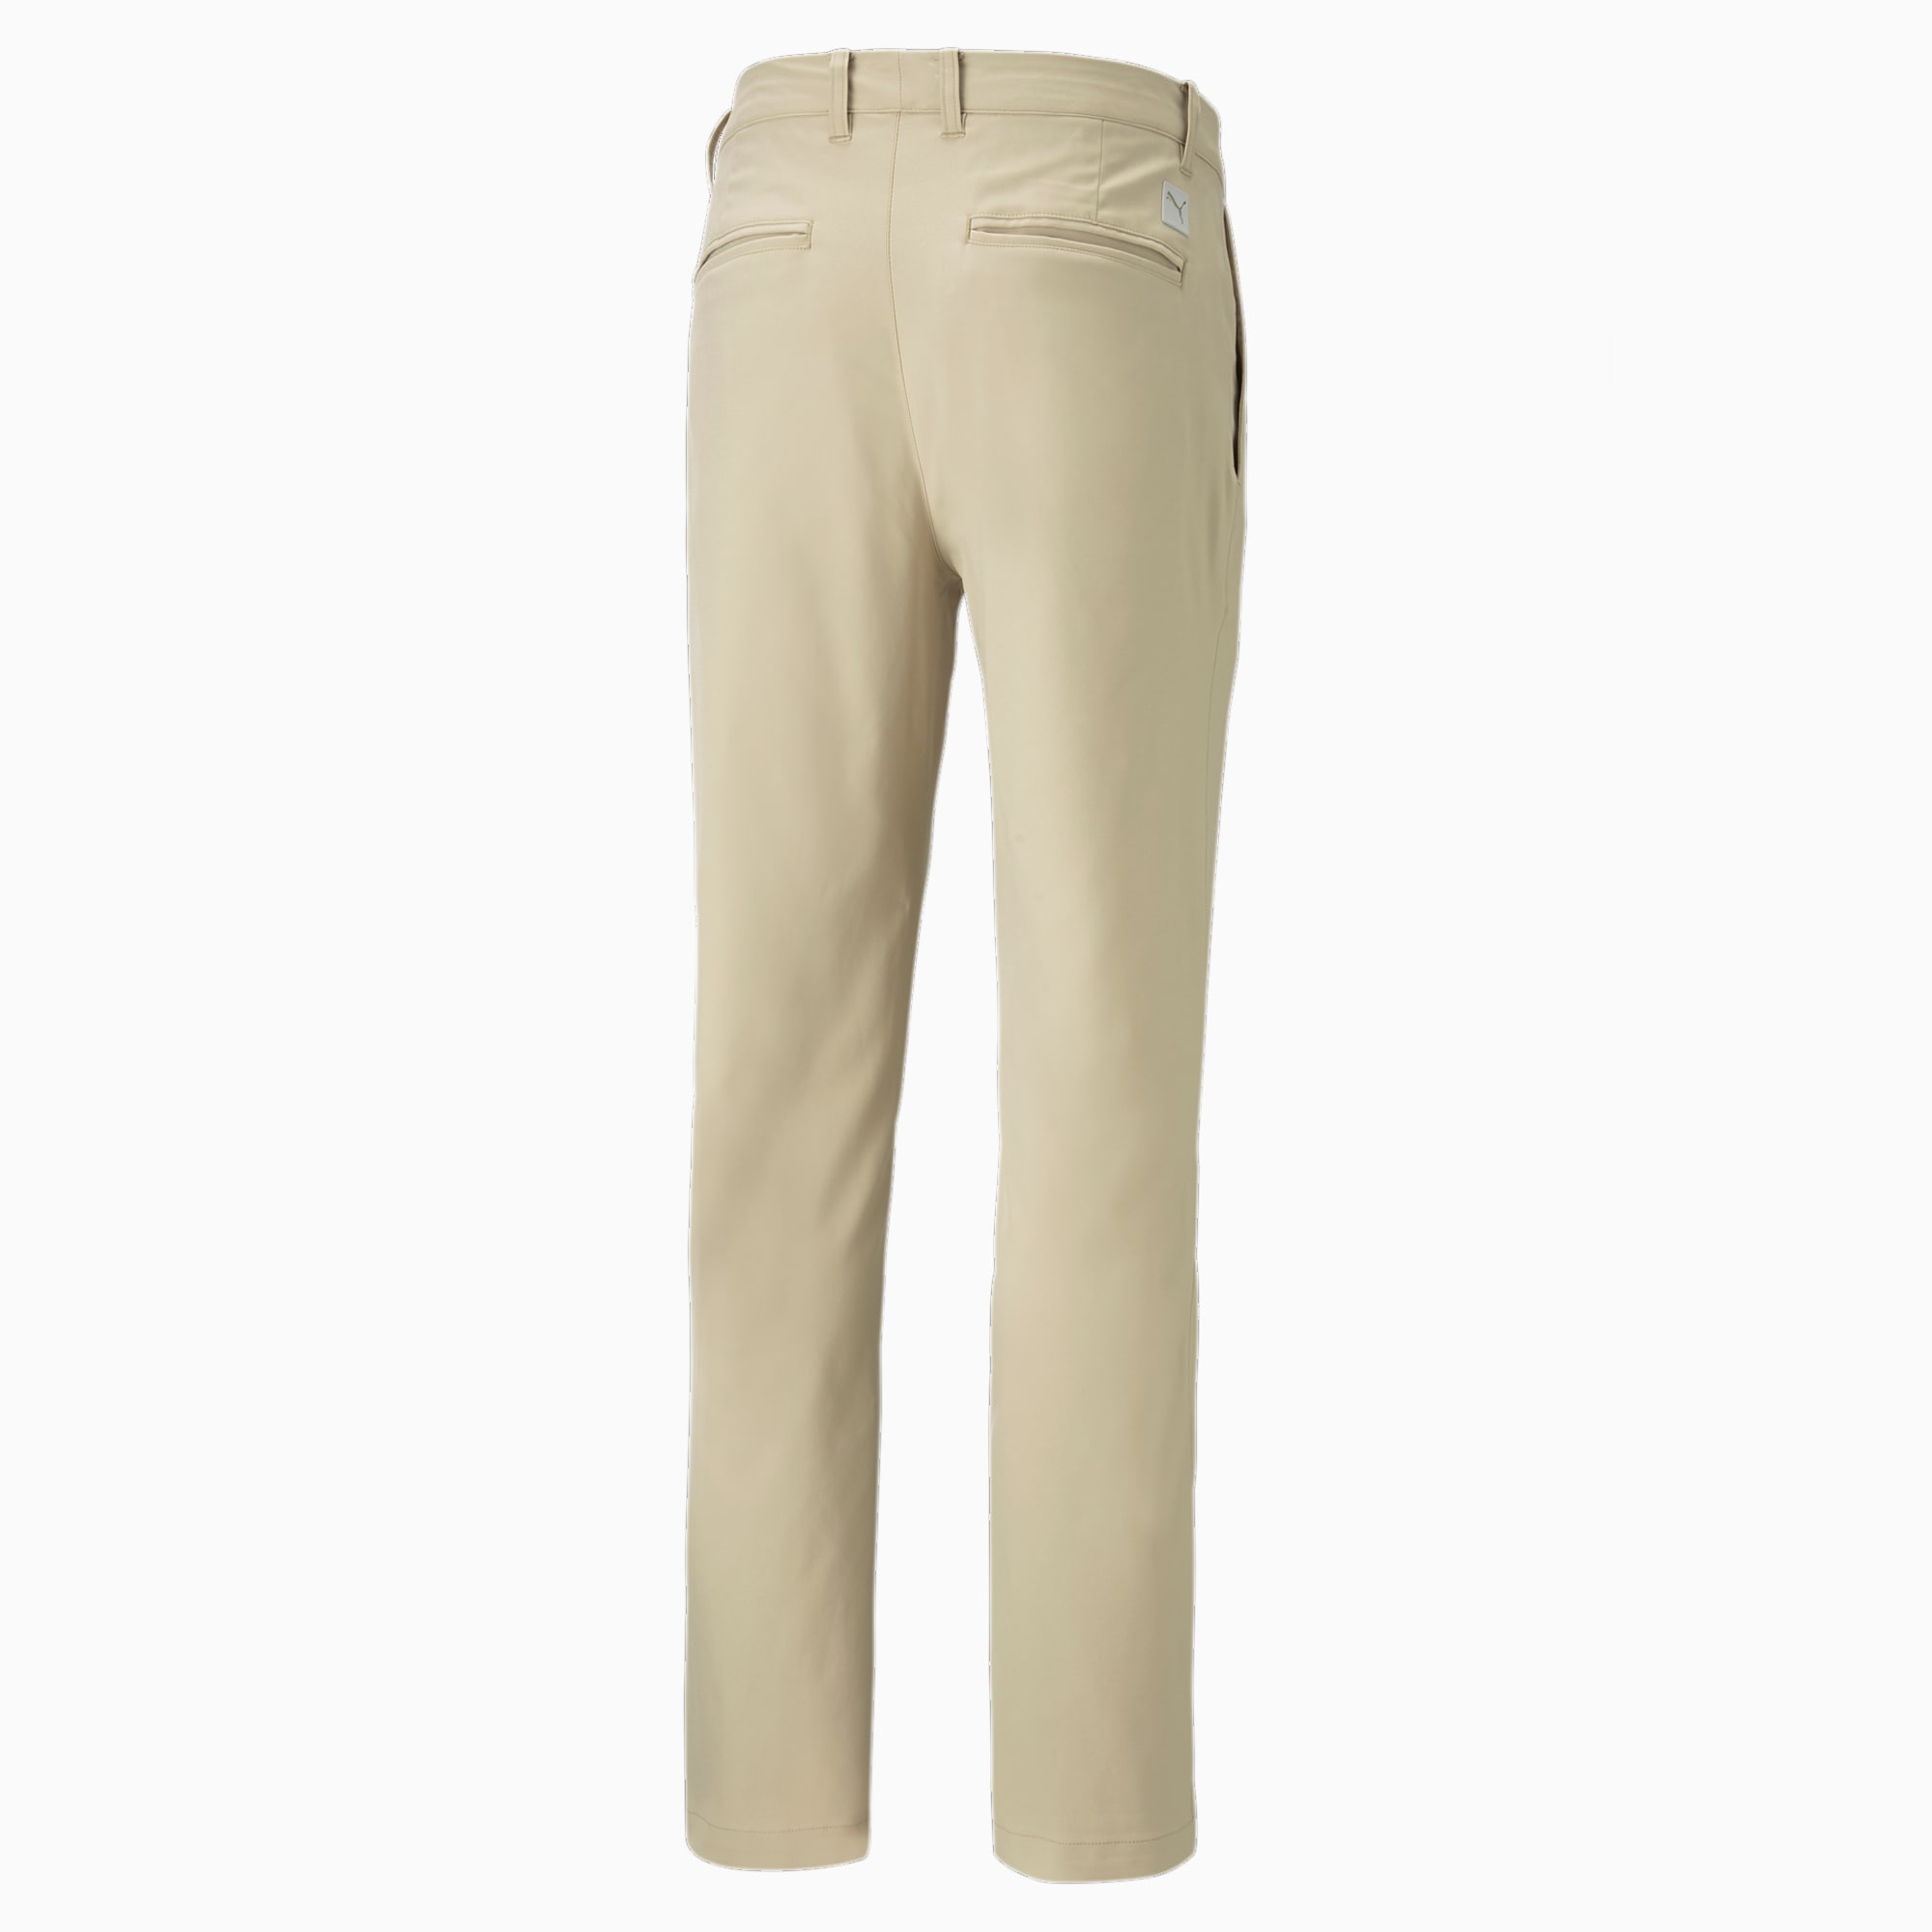 PUMA Dealer Tailored Golf Pants Men, Alabaster, Size 34/36, Clothing